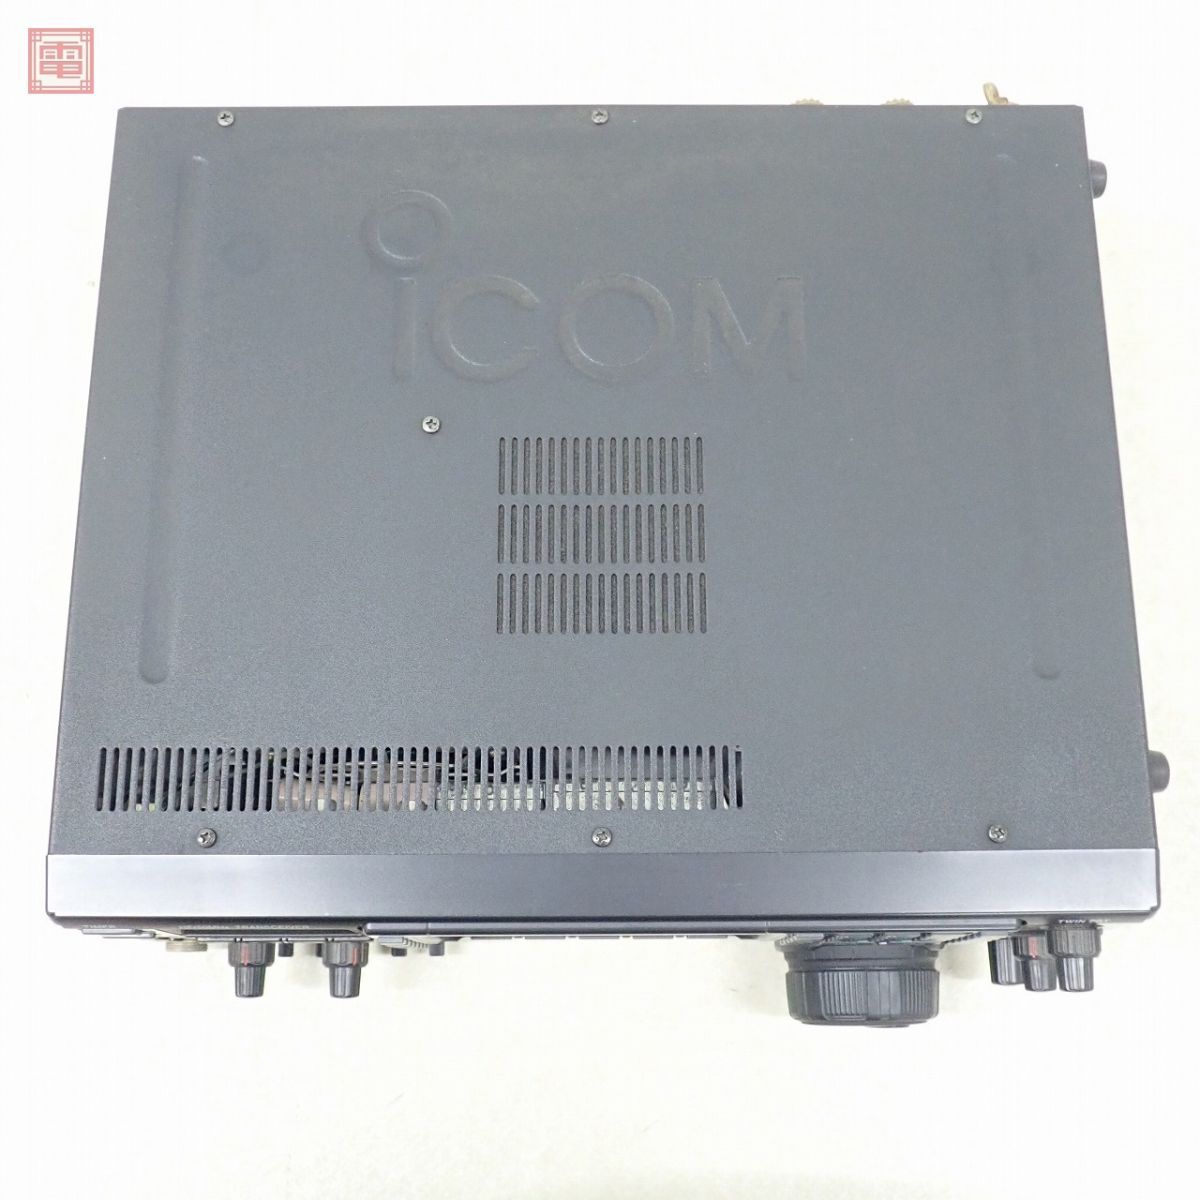  Icom IC-756PRO HF obi /50MHz 100W UT-102 installation settled * manual attaching ICOM[40